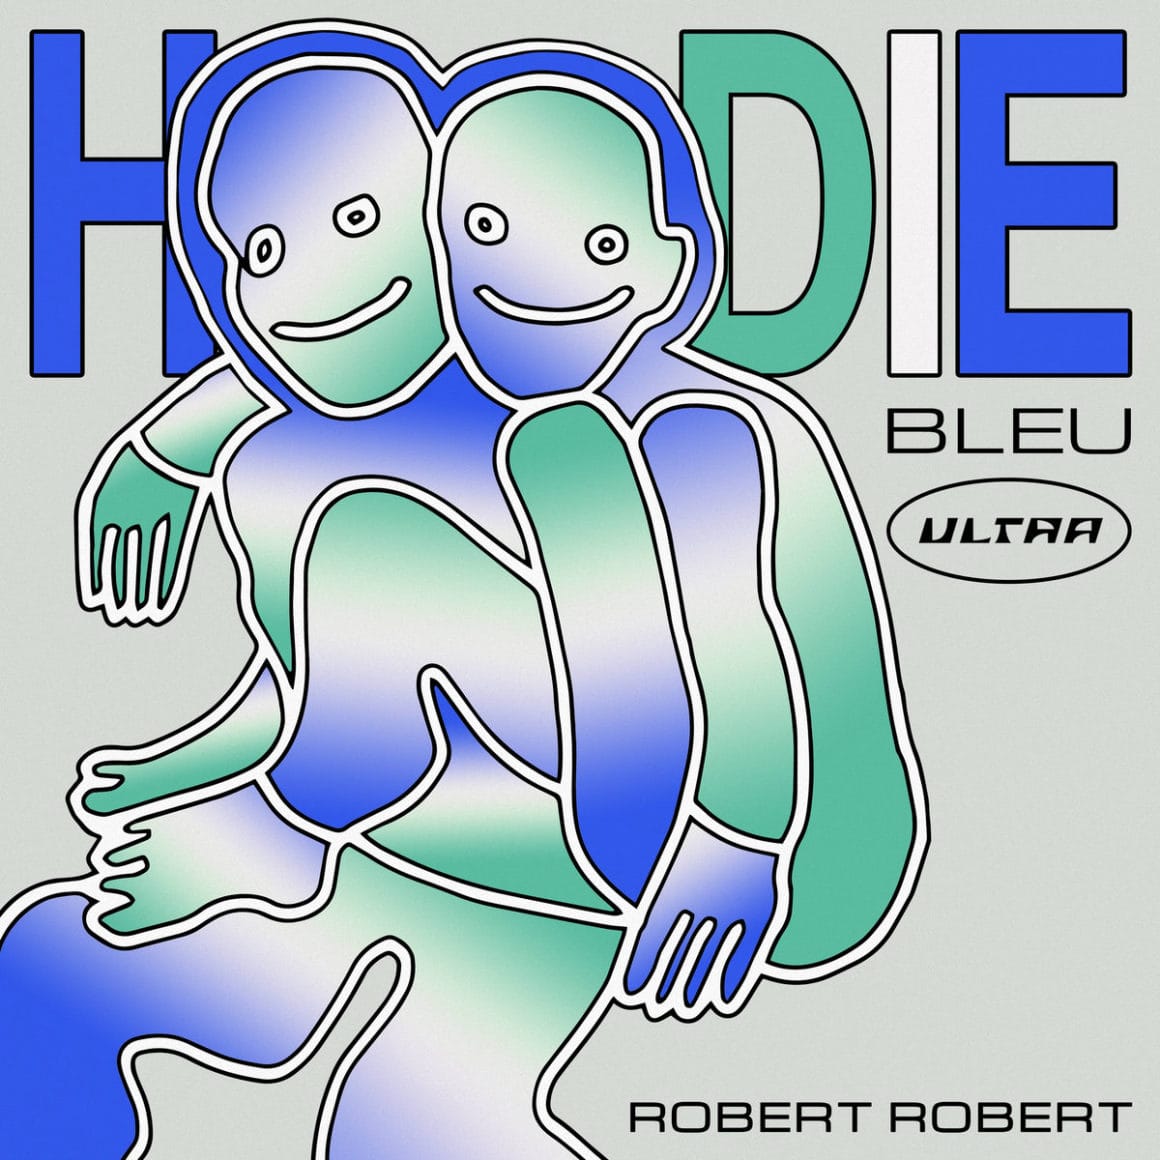 Hoodie bleu ultra